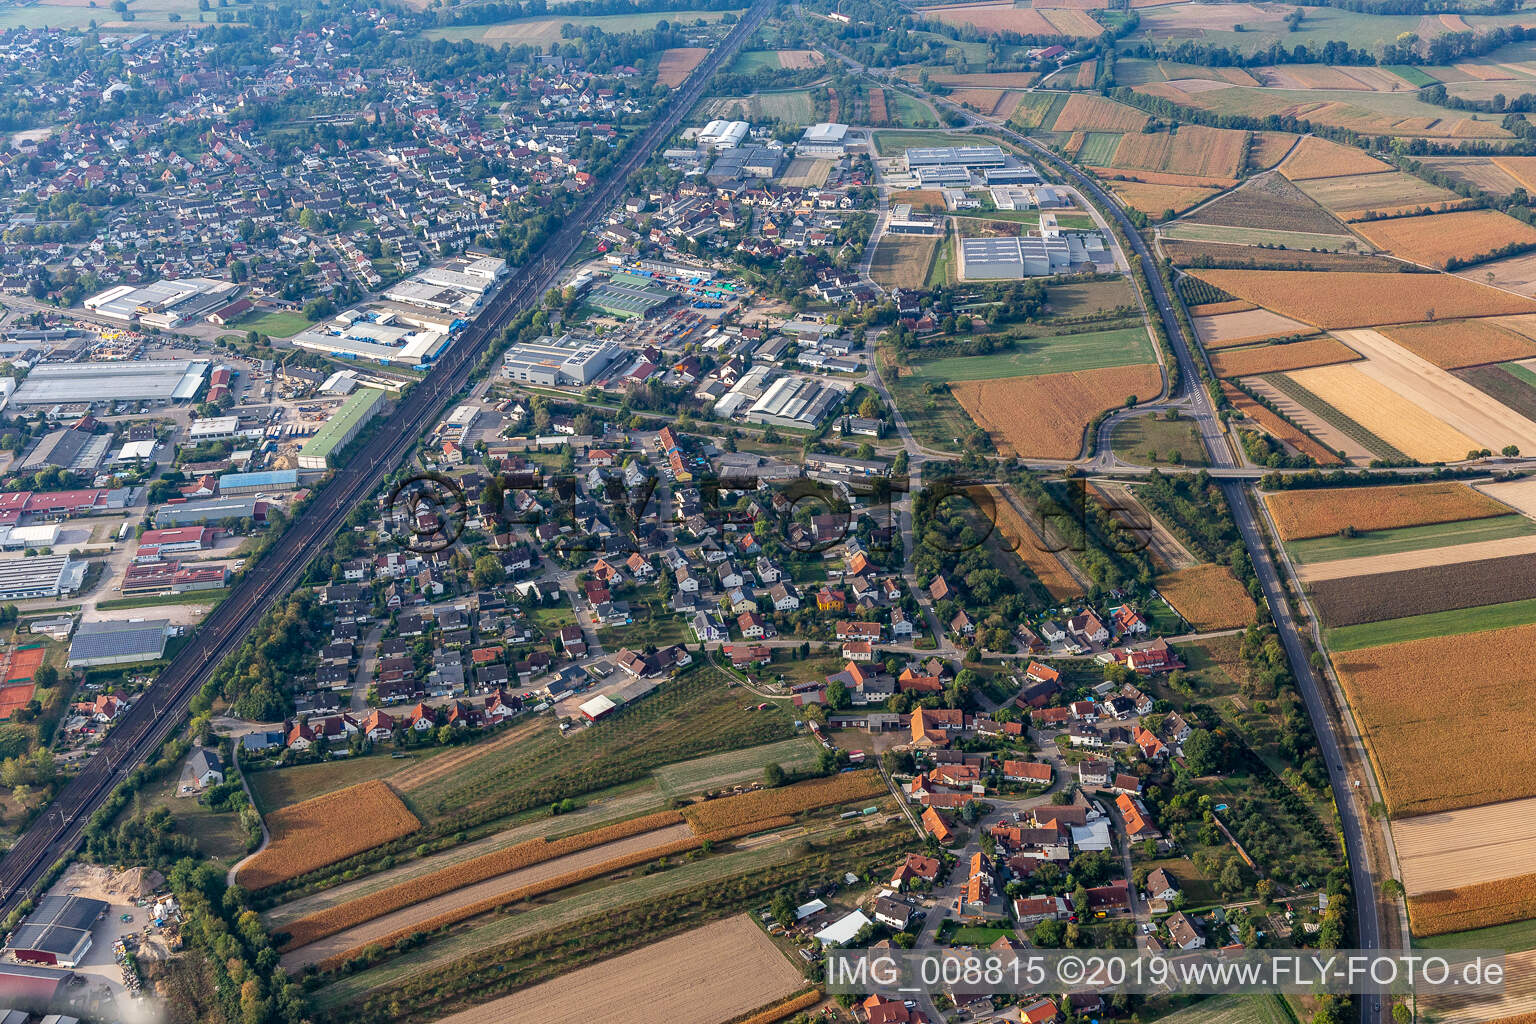 Southwest industrial area in Ottersweier in the state Baden-Wuerttemberg, Germany